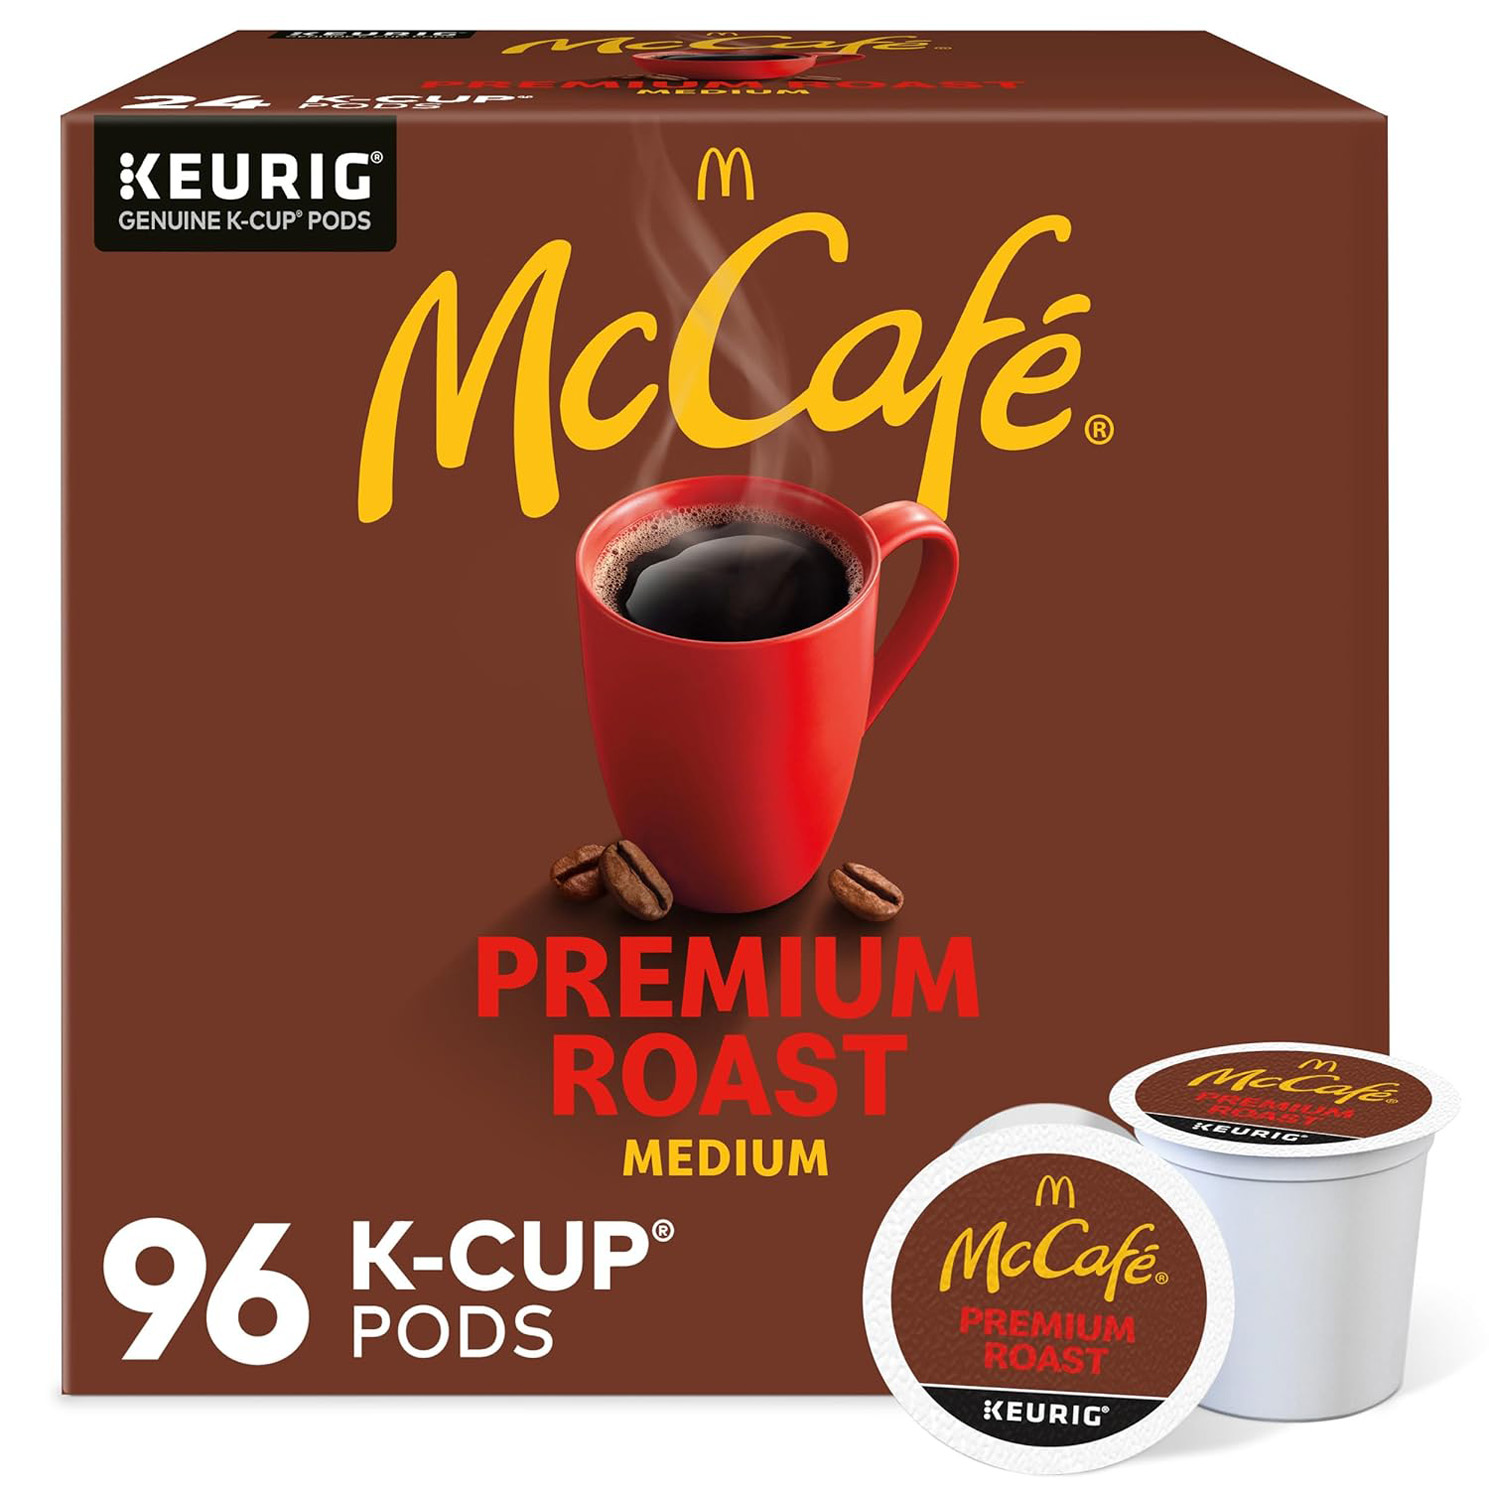 McCafe Premium Roast, Keurig Single Serve K-Cup Pods, Medium Roast Coffee Pods, 96 Count